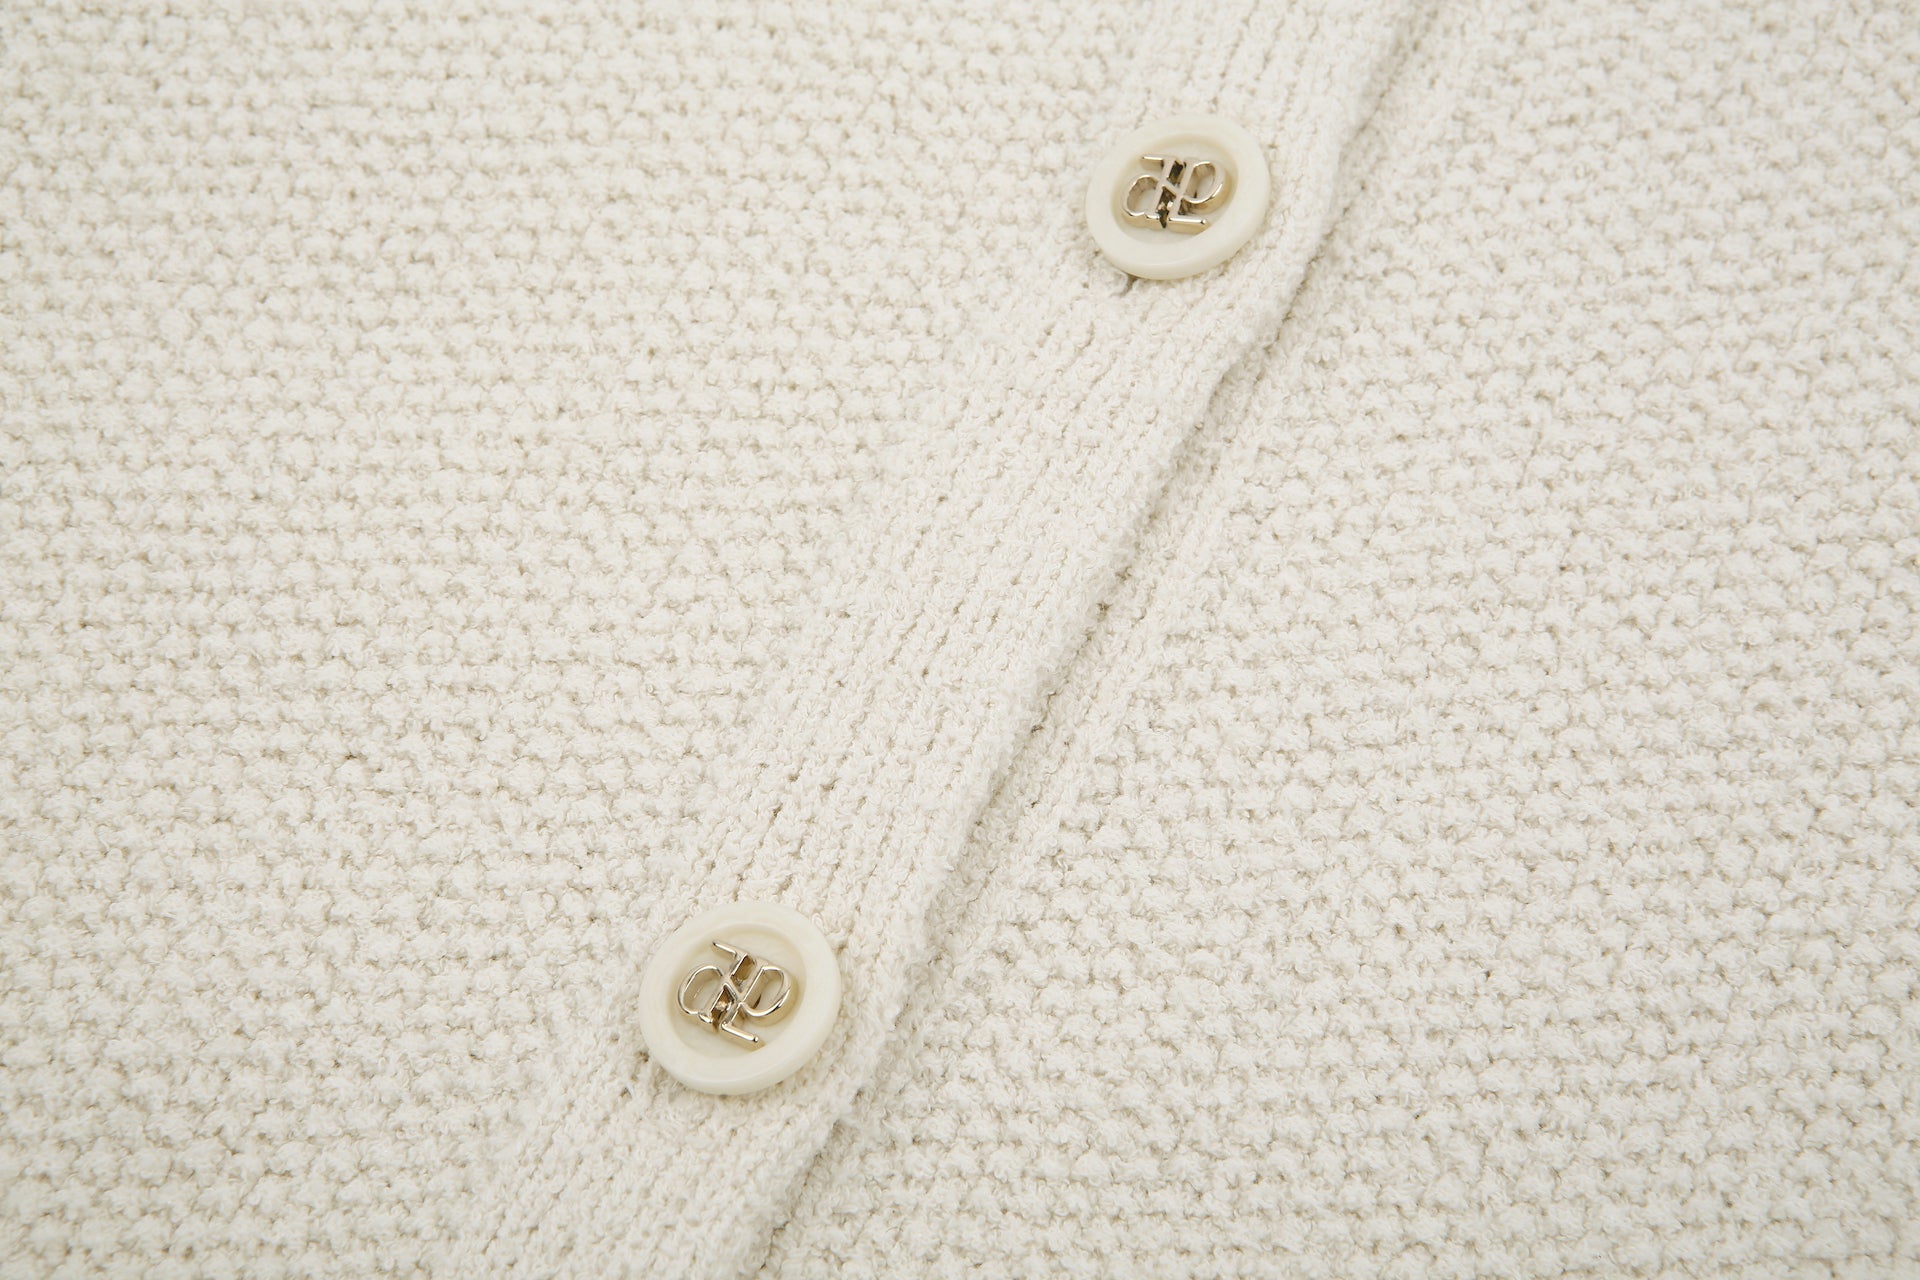 Half Sleeve Knit Cardigan In Ivory